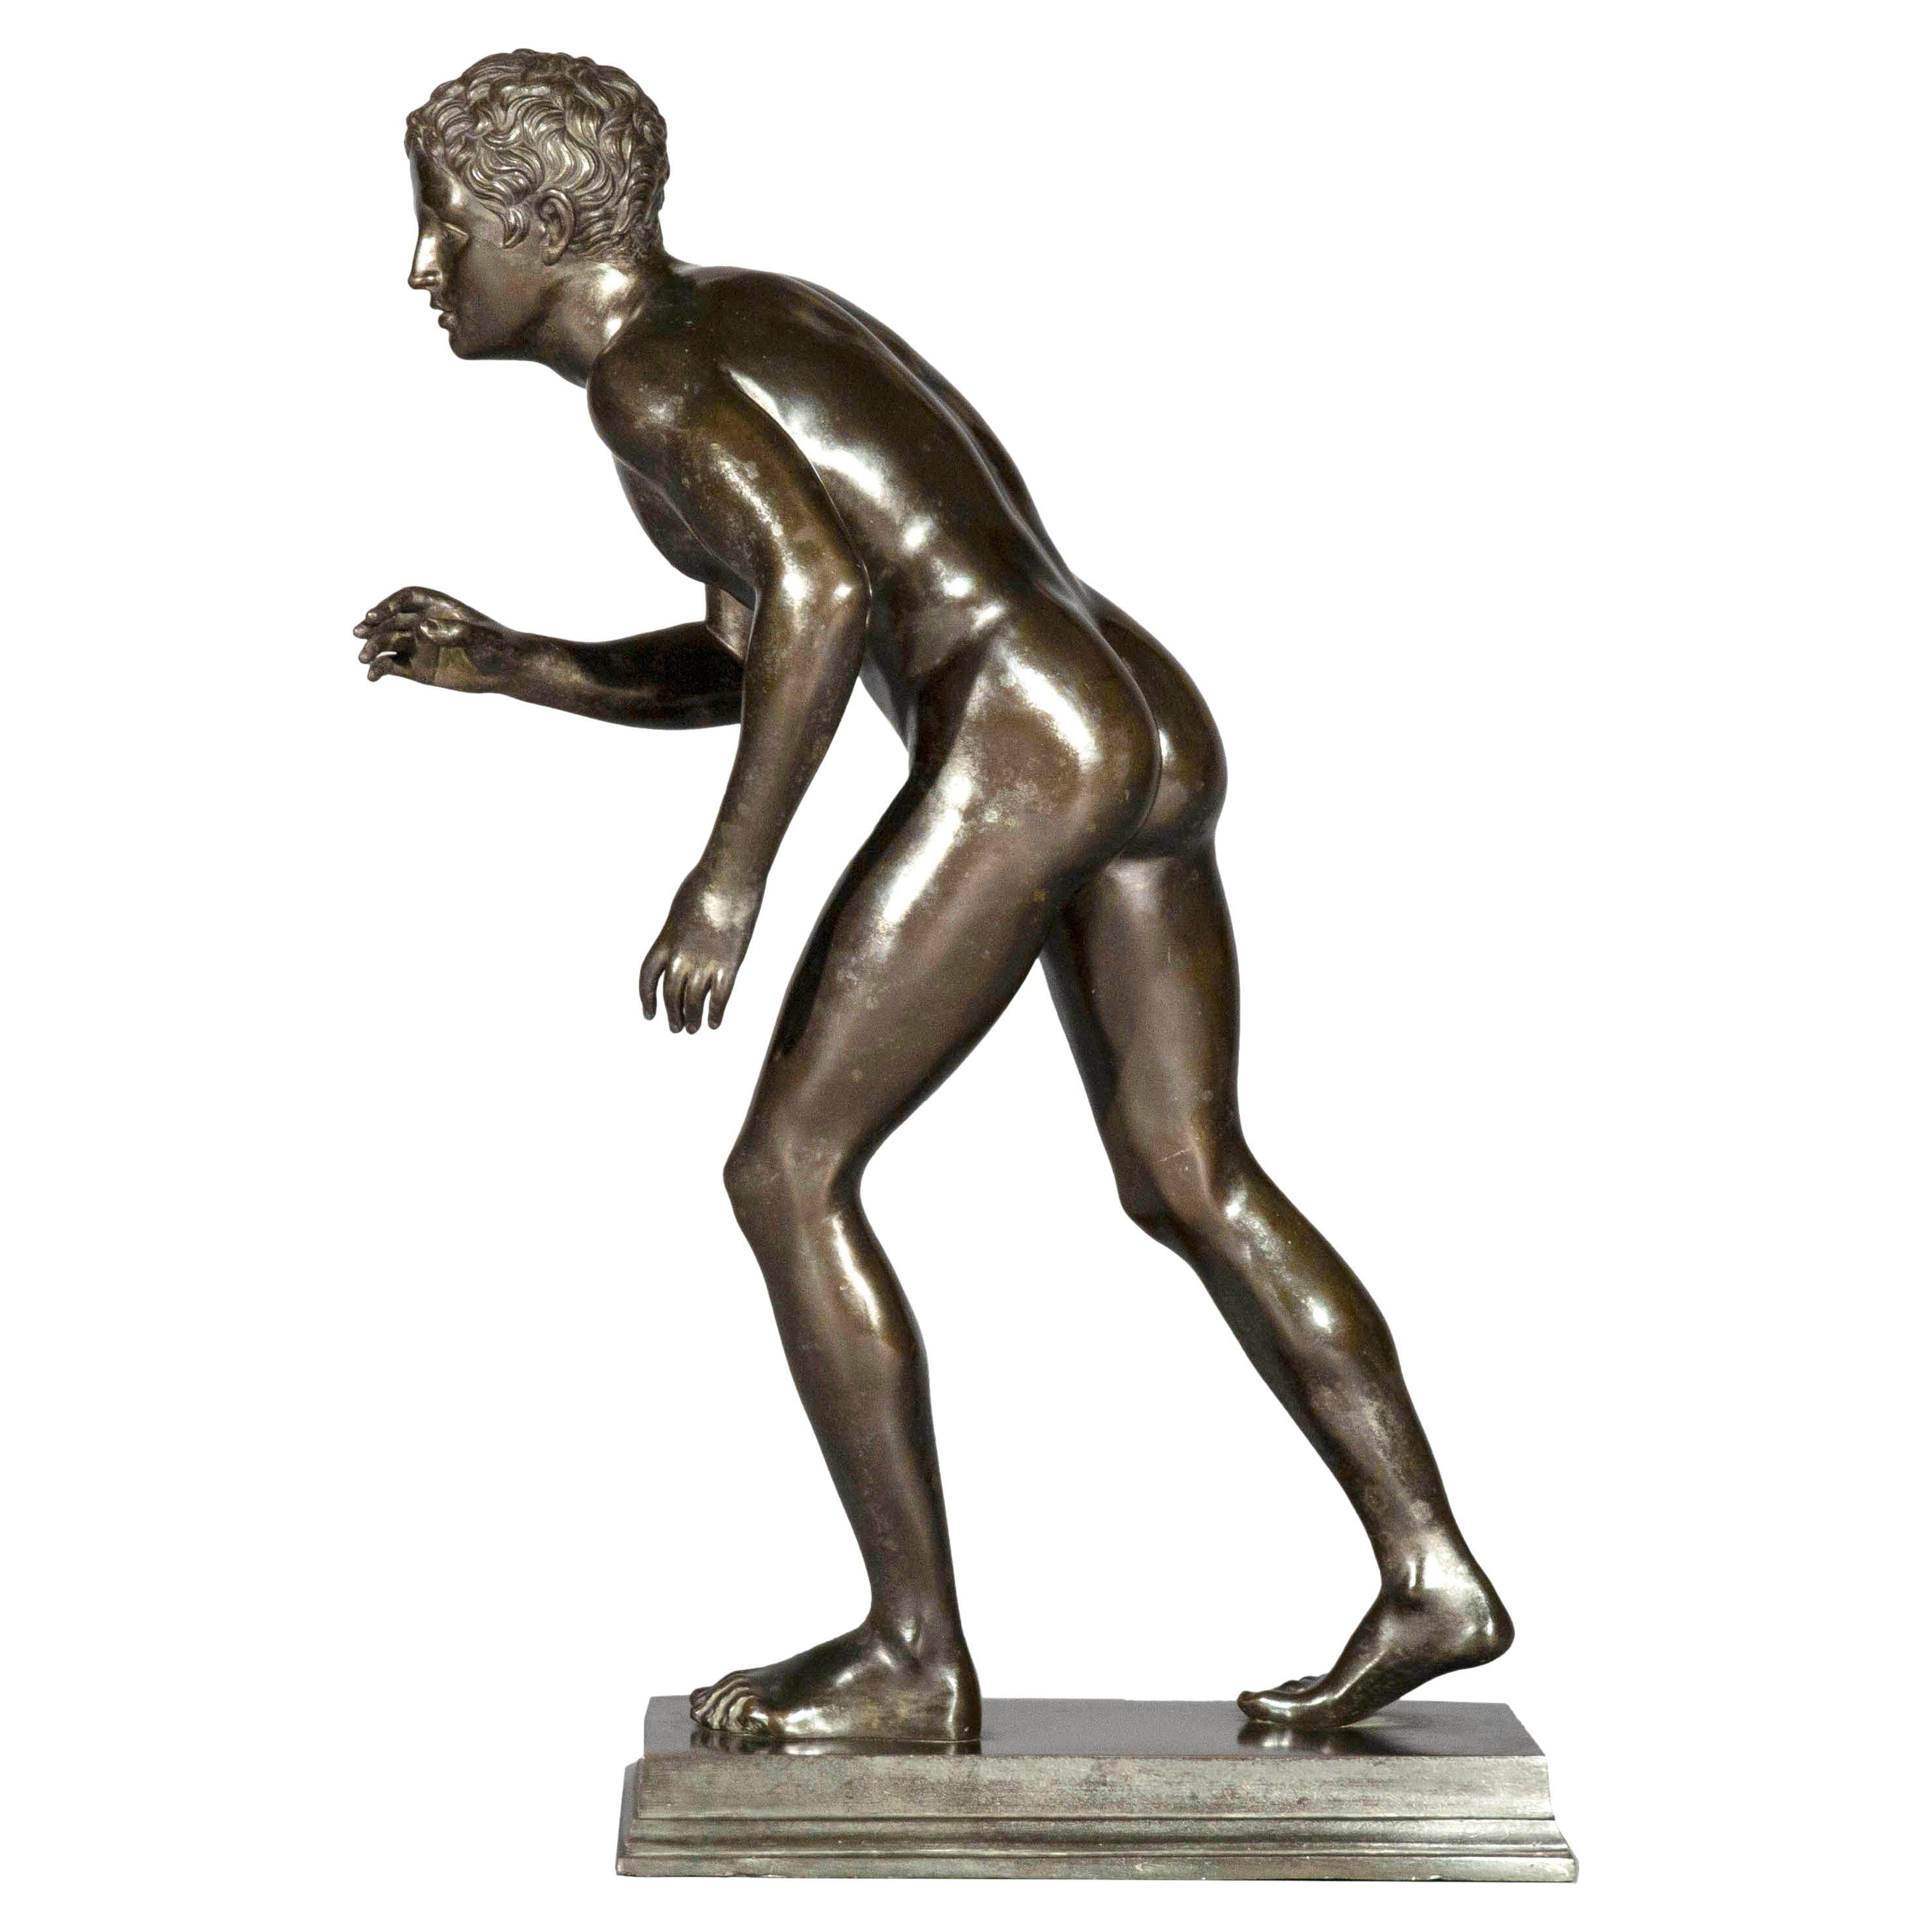 Antique Bronze Sculpture of an Athlete